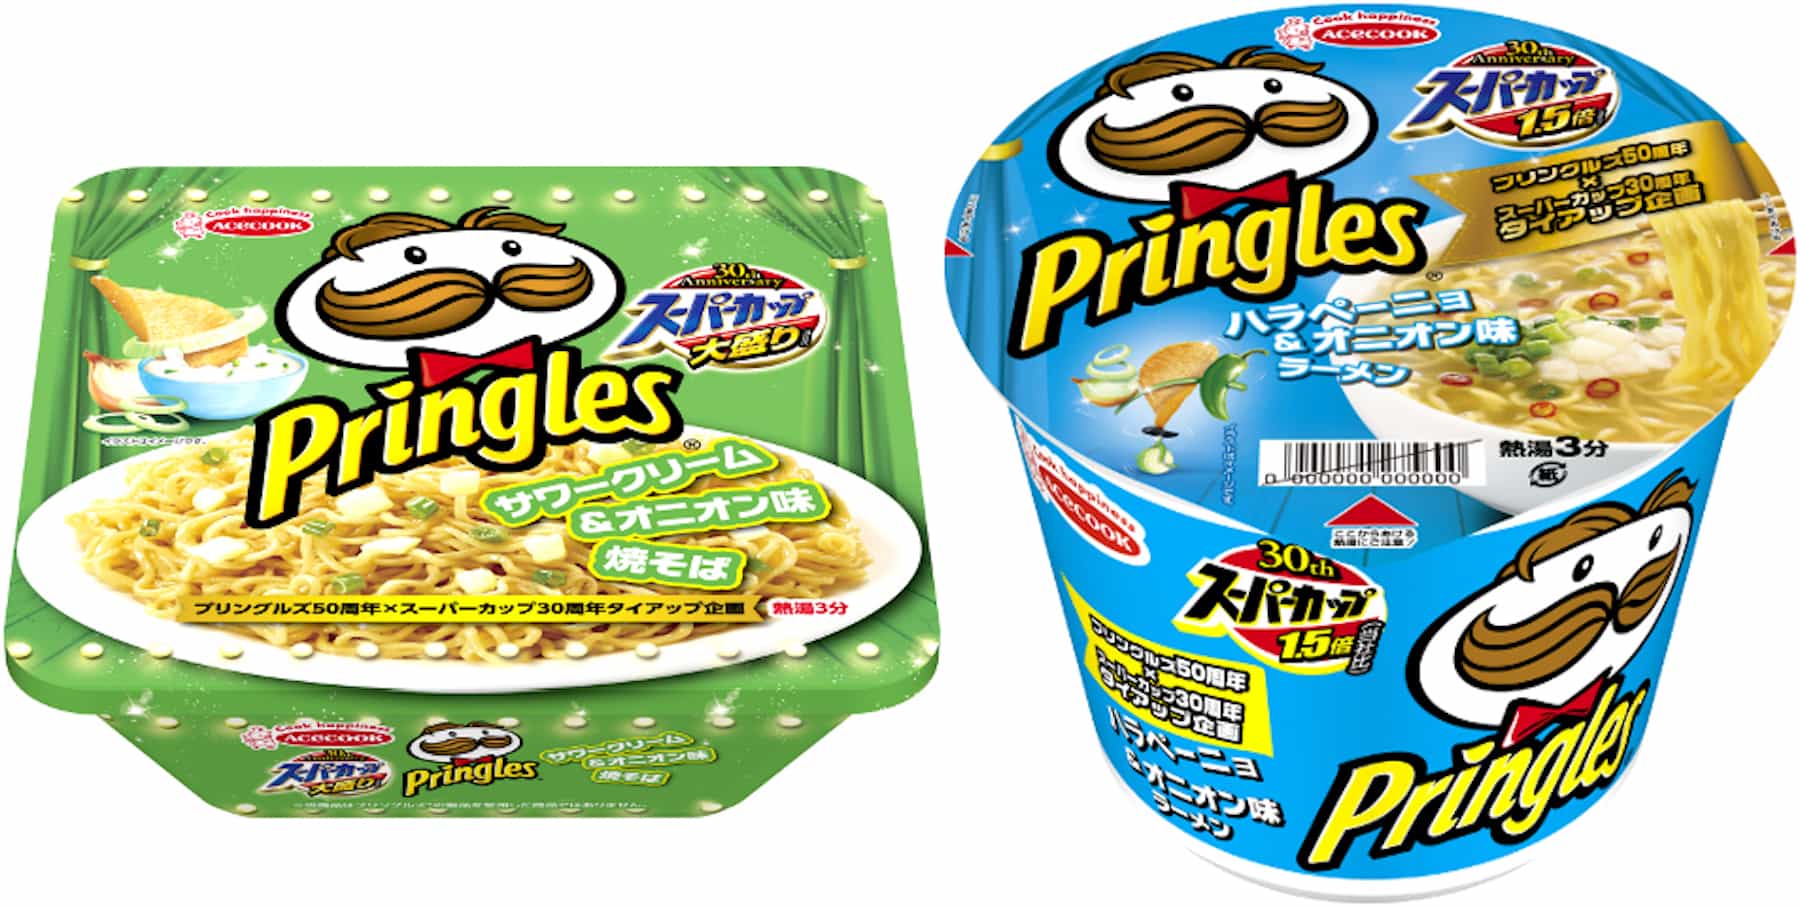 pringles-japan-super-cup-cup-noodles-japanese-instant-ramen-91